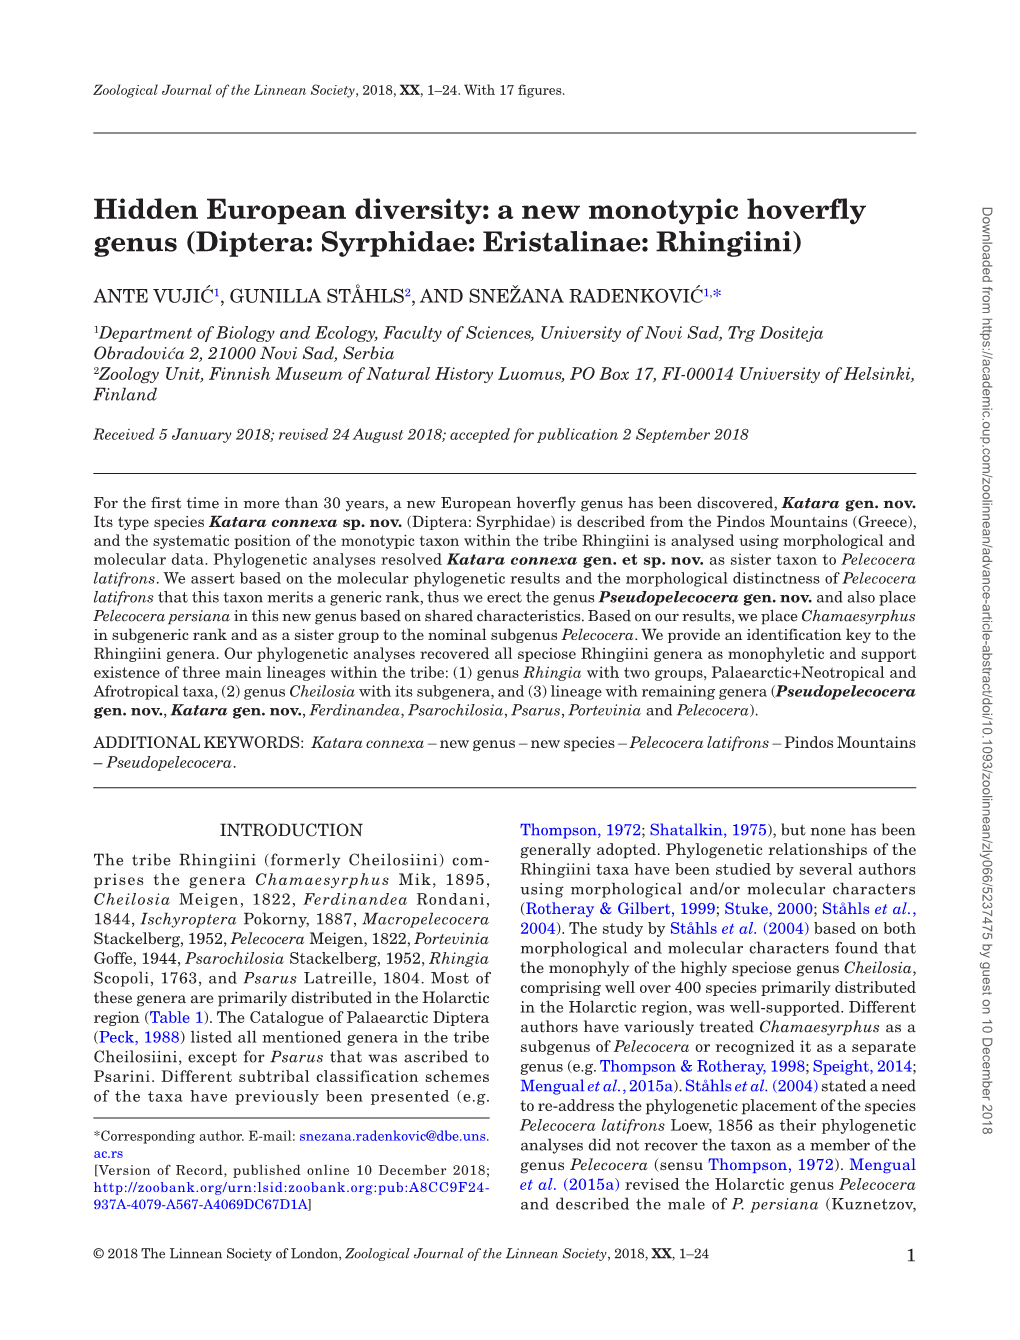 Hidden European Diversity: a New Monotypic Hoverfly Genus